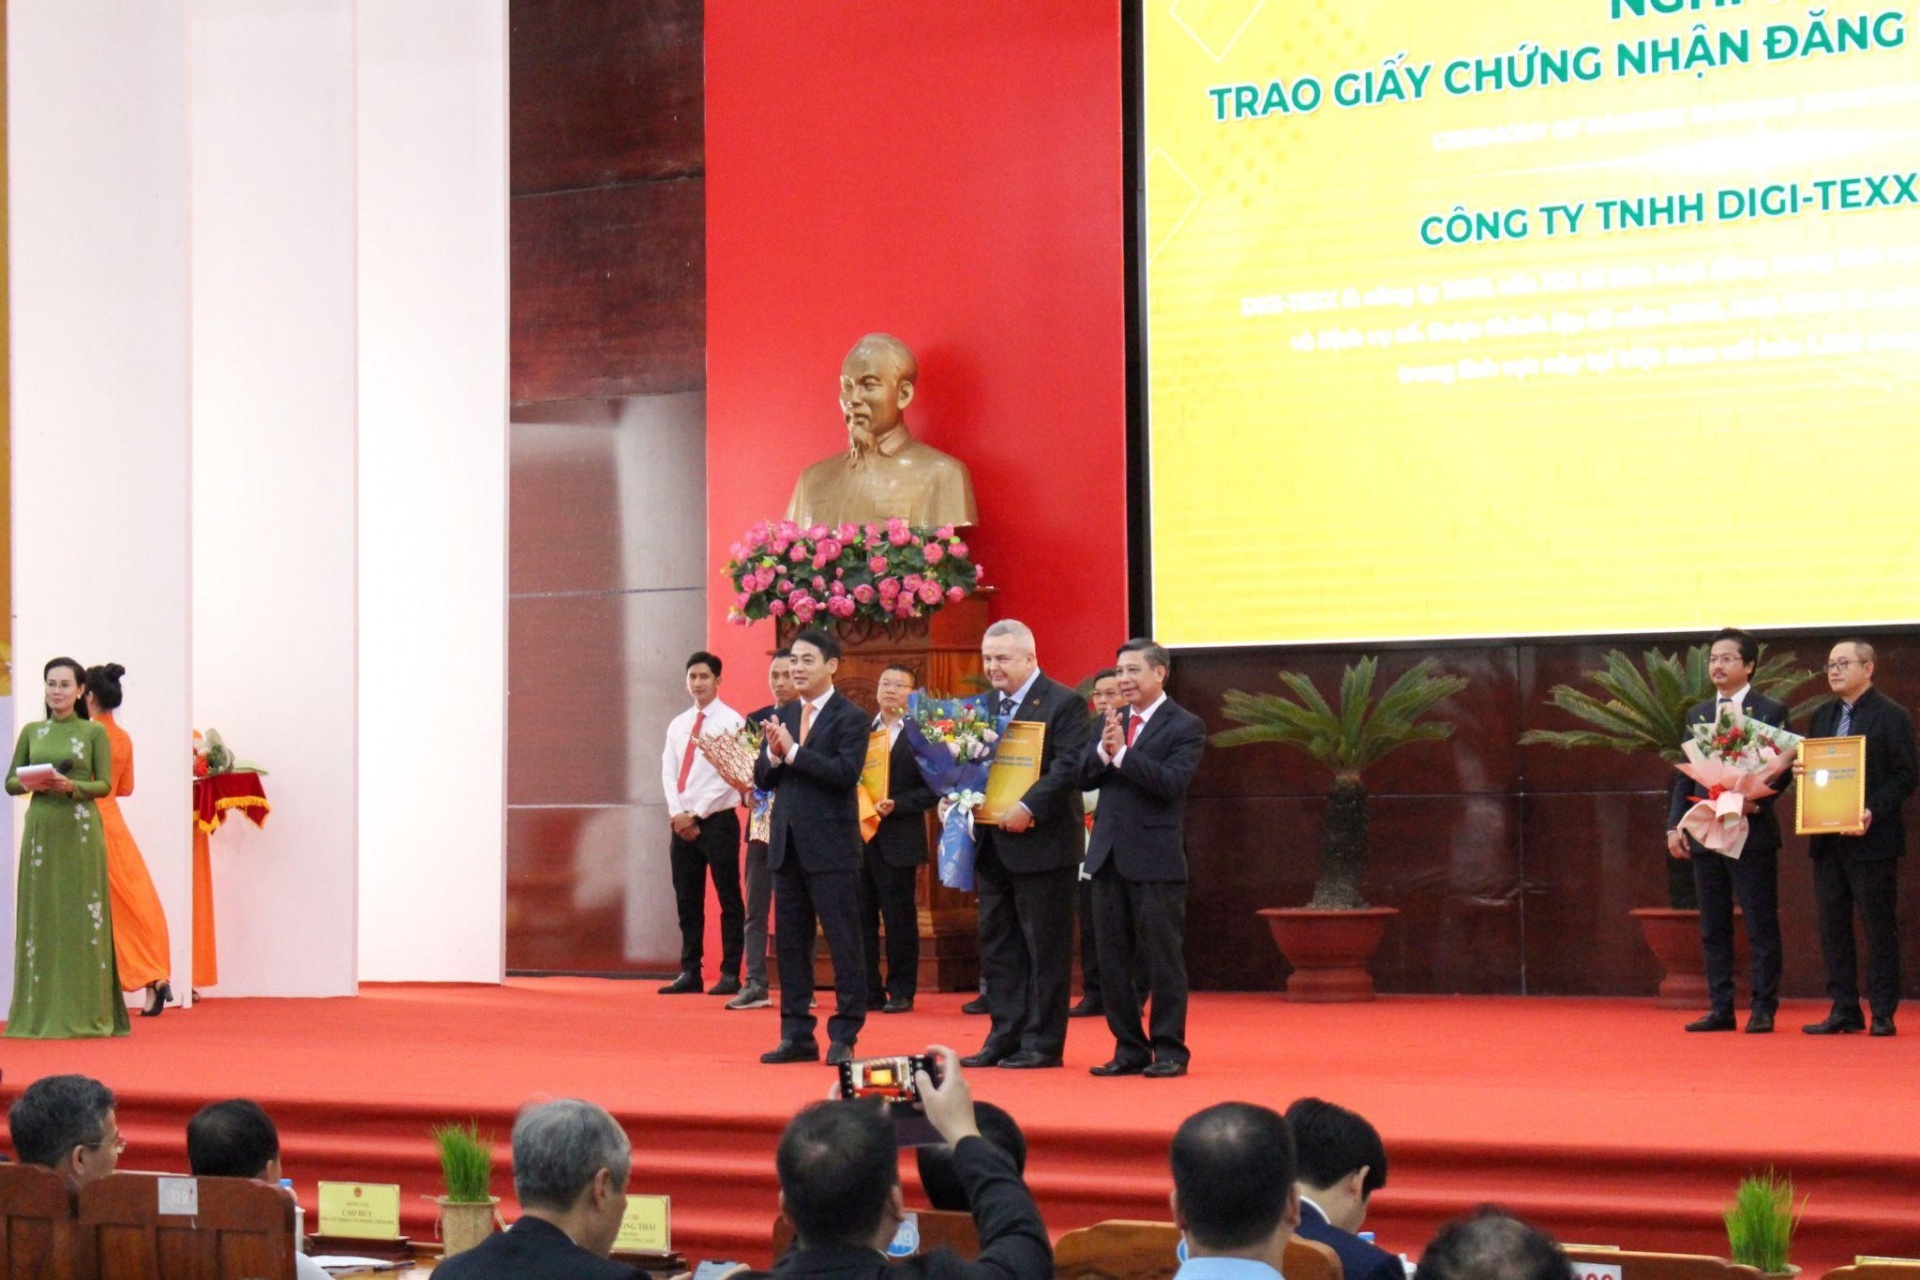 DIGI-TEXX accompanying Hau Giang province to unlock the potential of digital economy (PR)